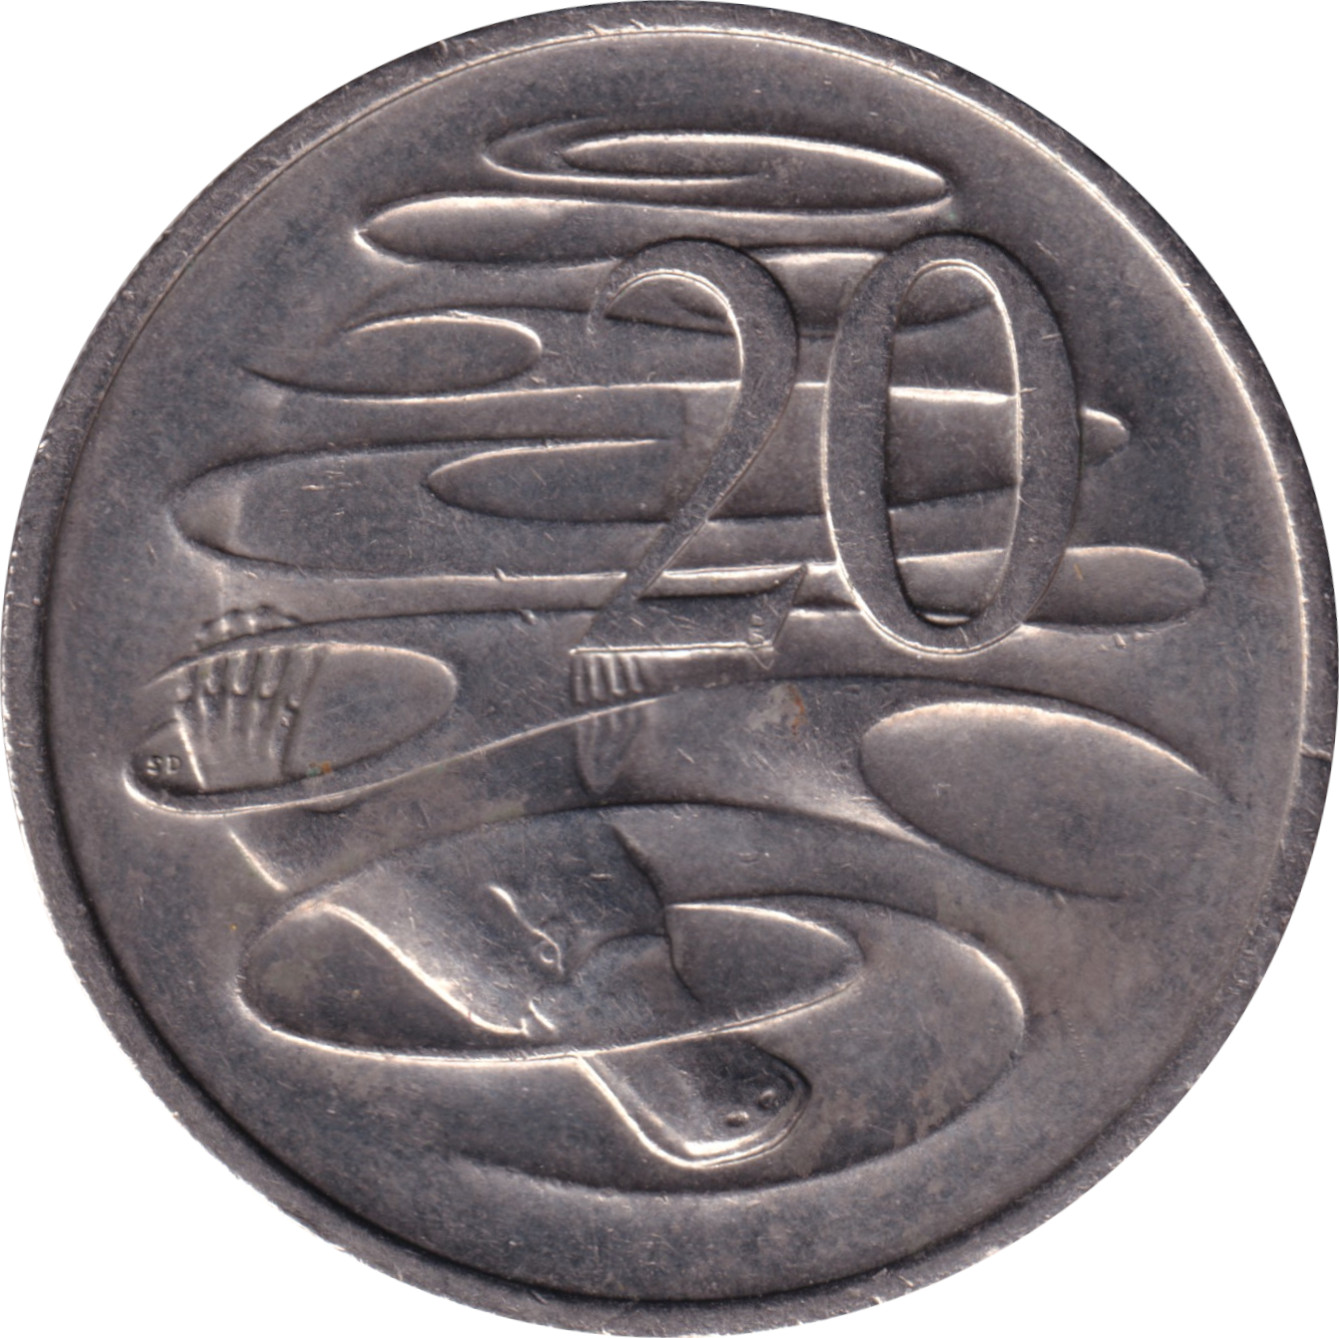 20 cents - Elizabeth II - Mature head